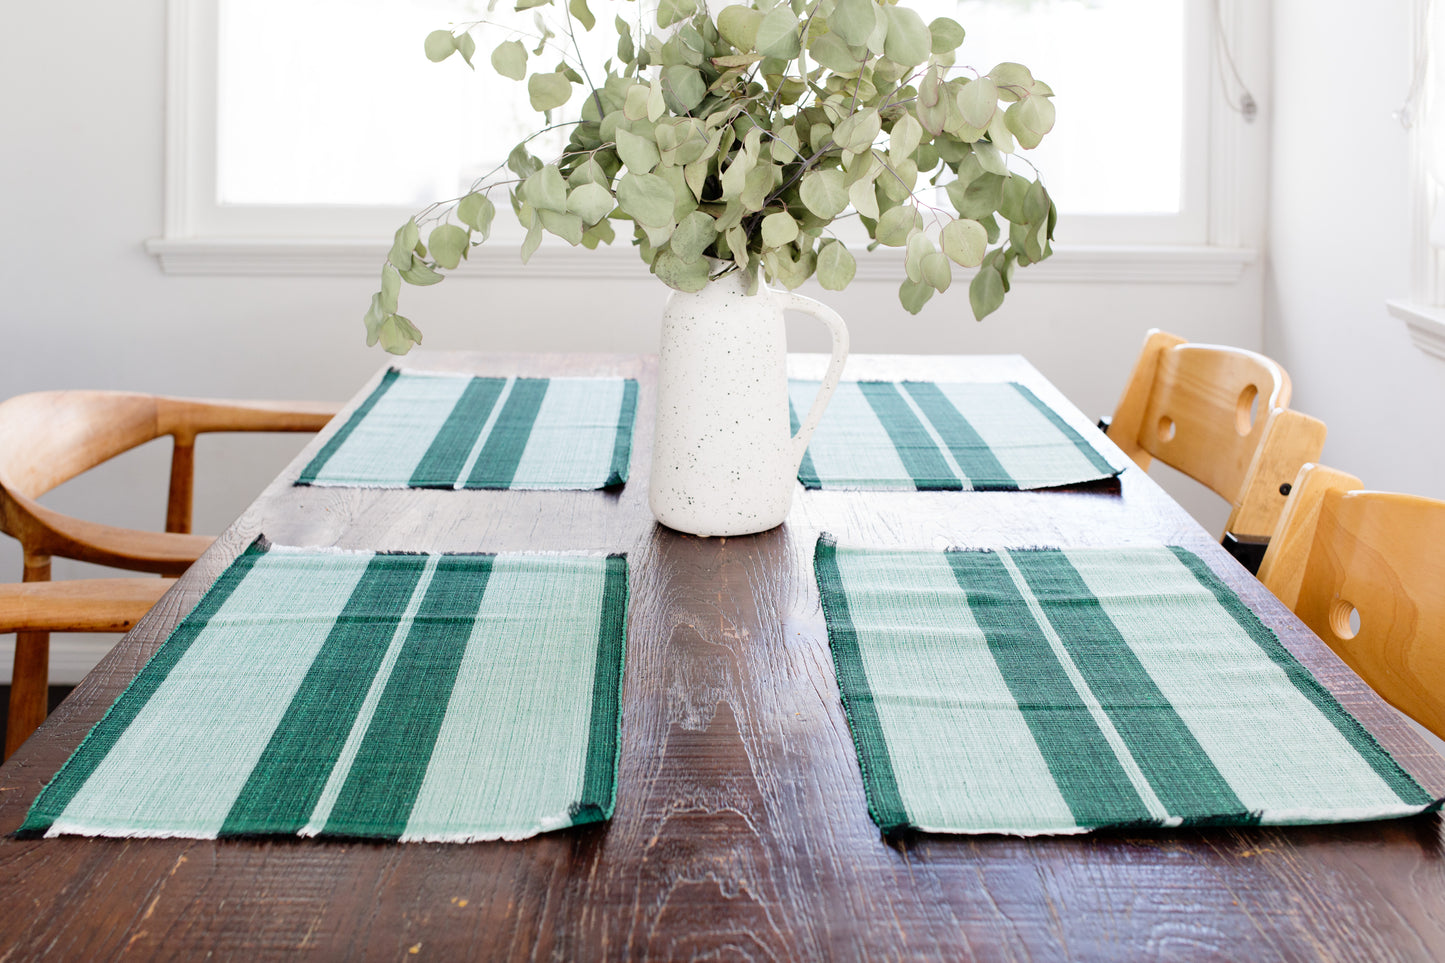 Housewarming Gifts | Green Placemat & Napkins